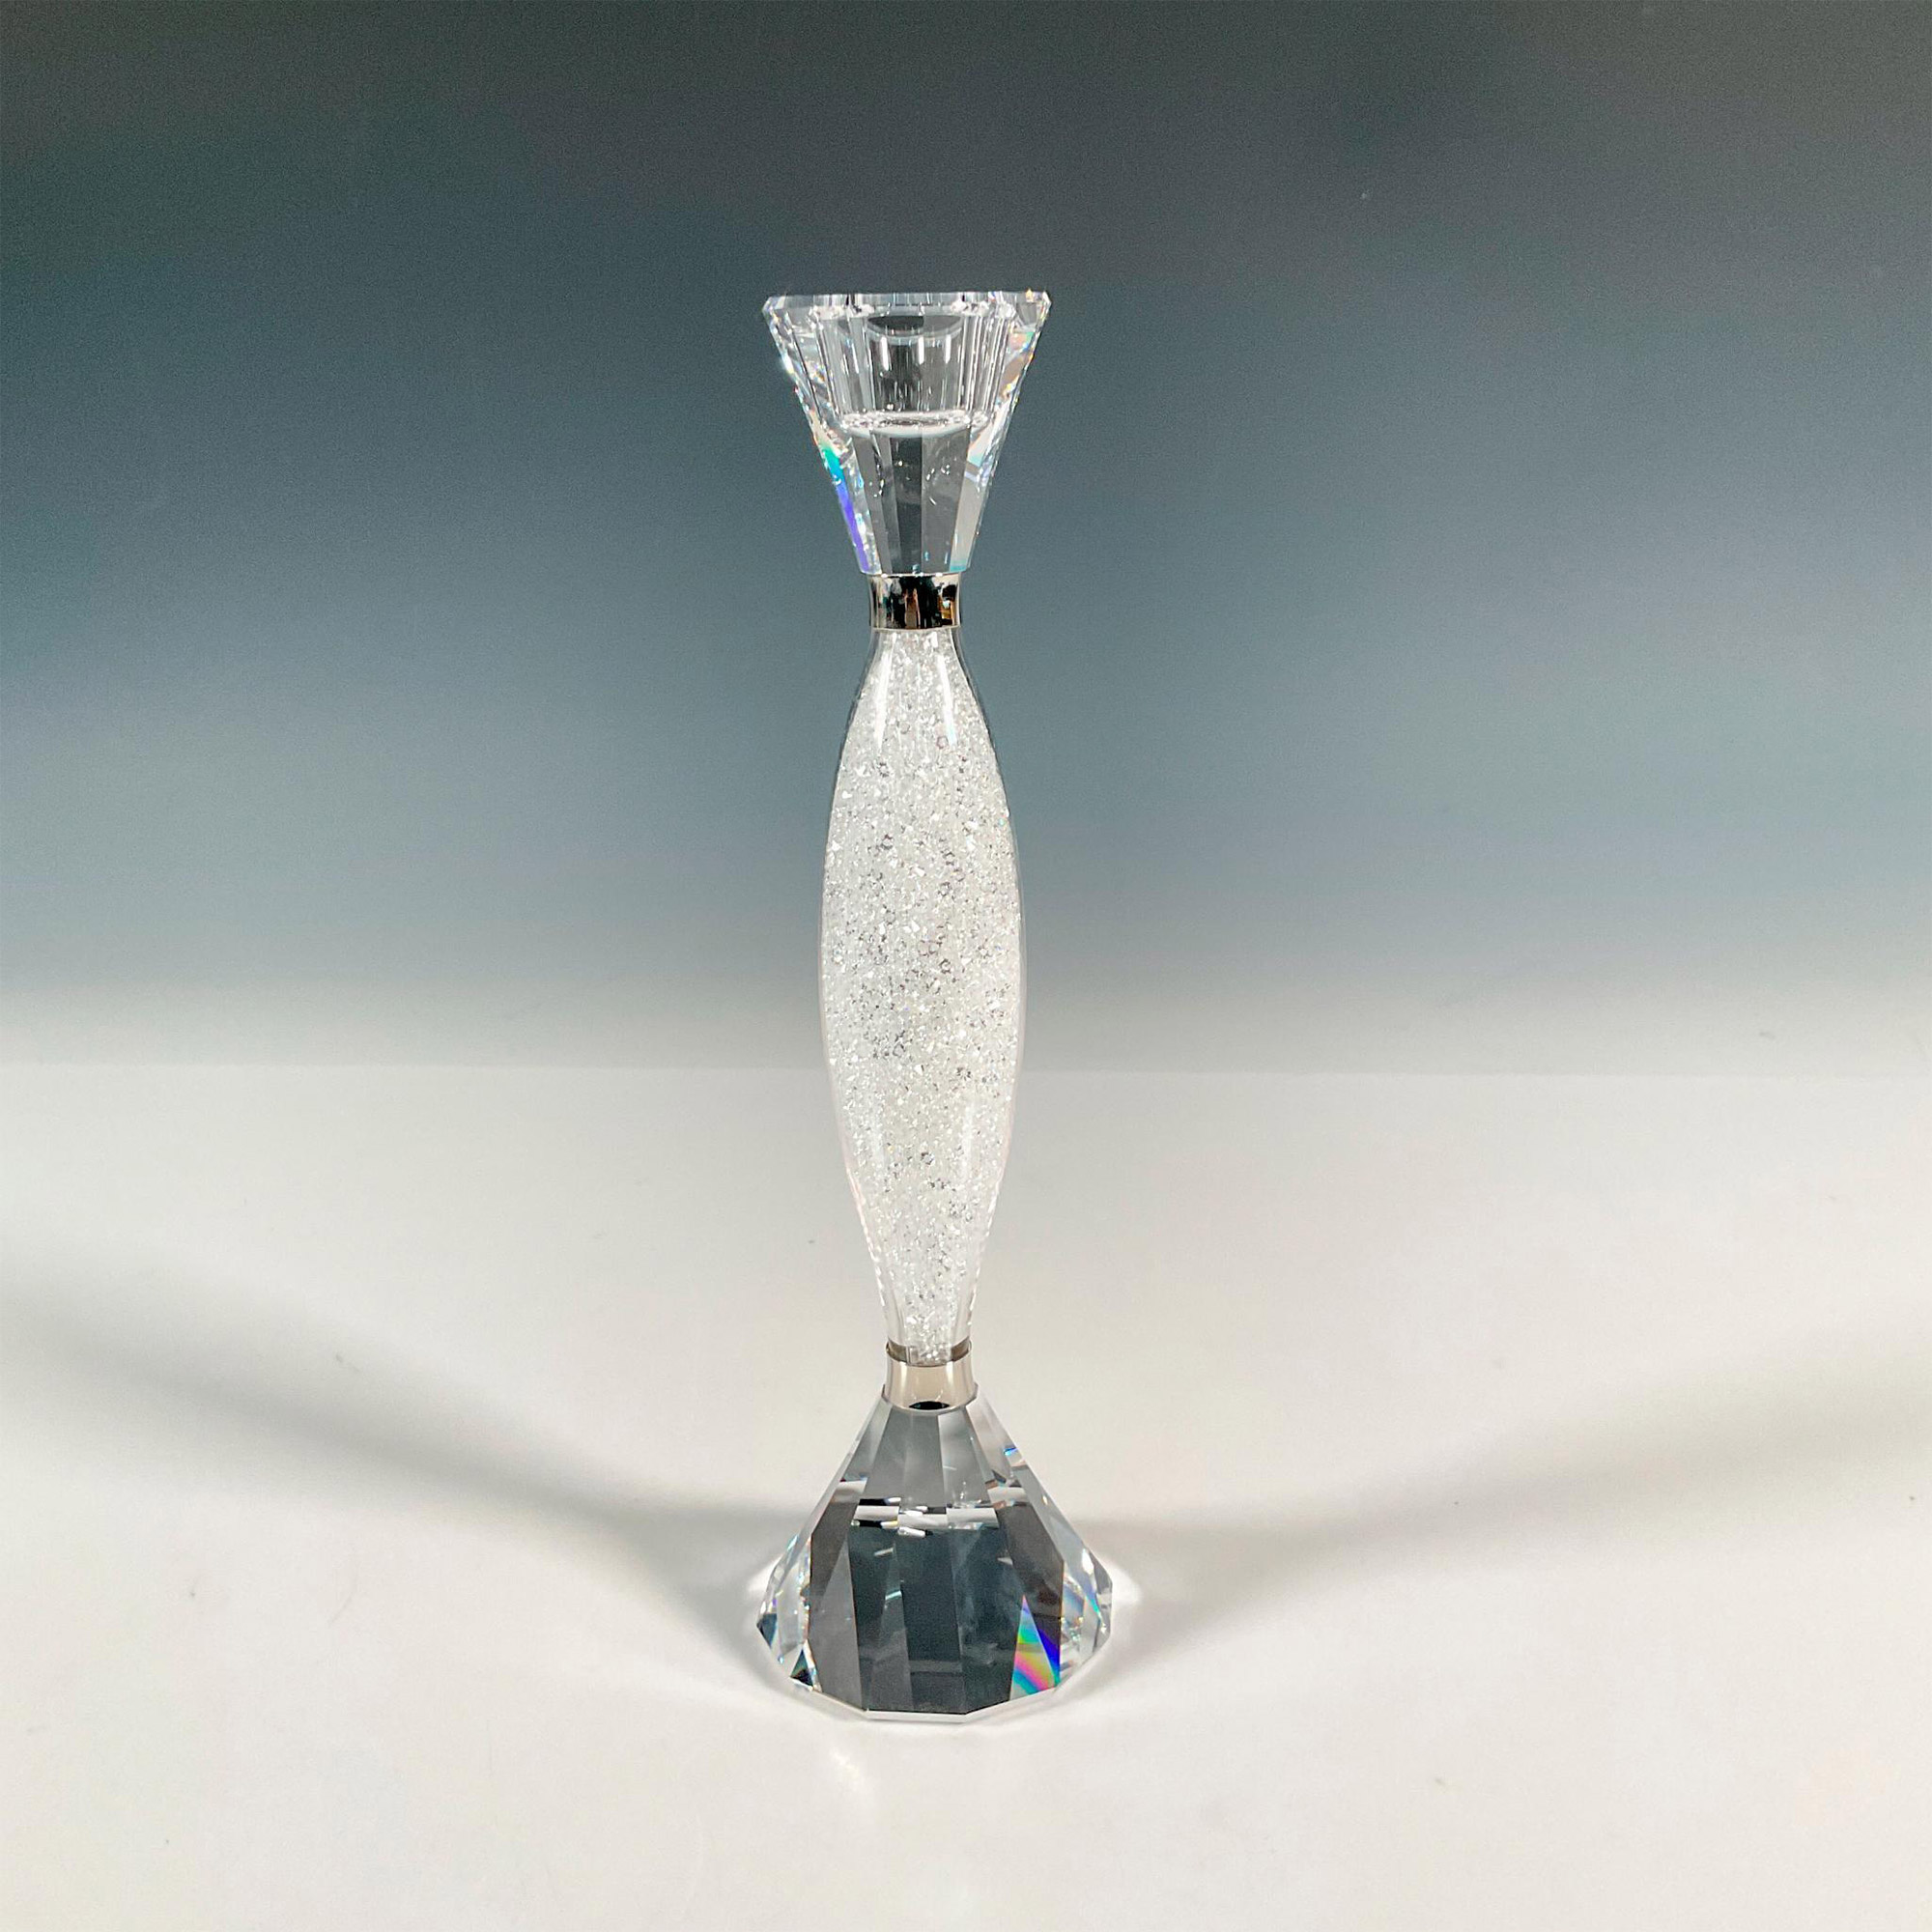 Swarovski Crystal Candle Holder, Crystalline Medium Pinched - Image 2 of 4